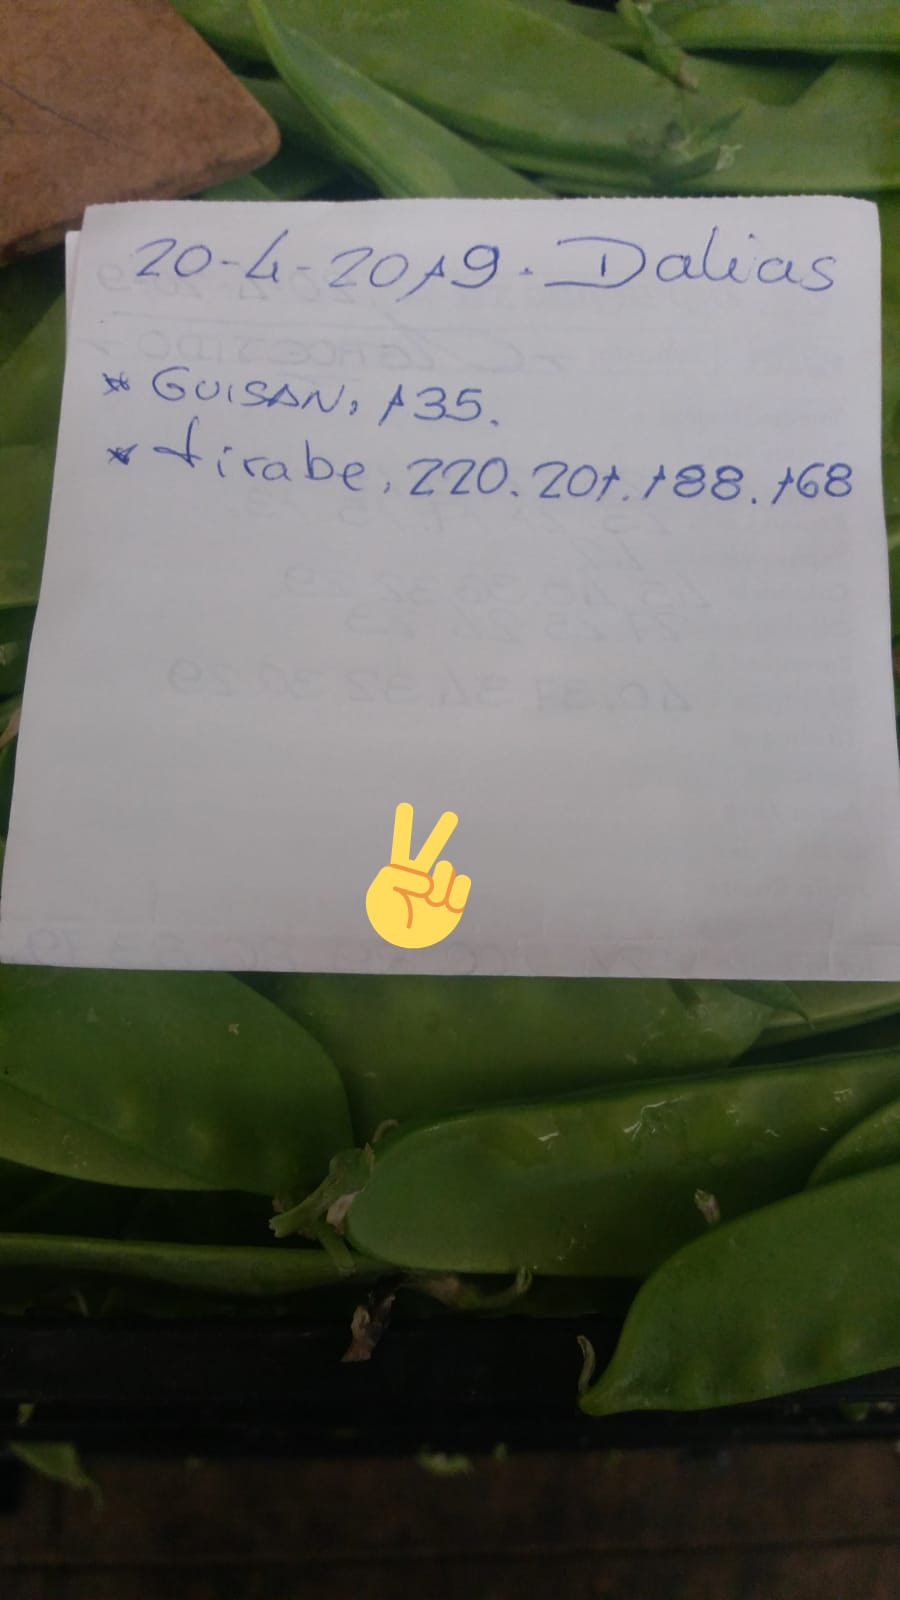 Subasta hortofrutícola AgroEjido Dalias 20 de Abril 2019